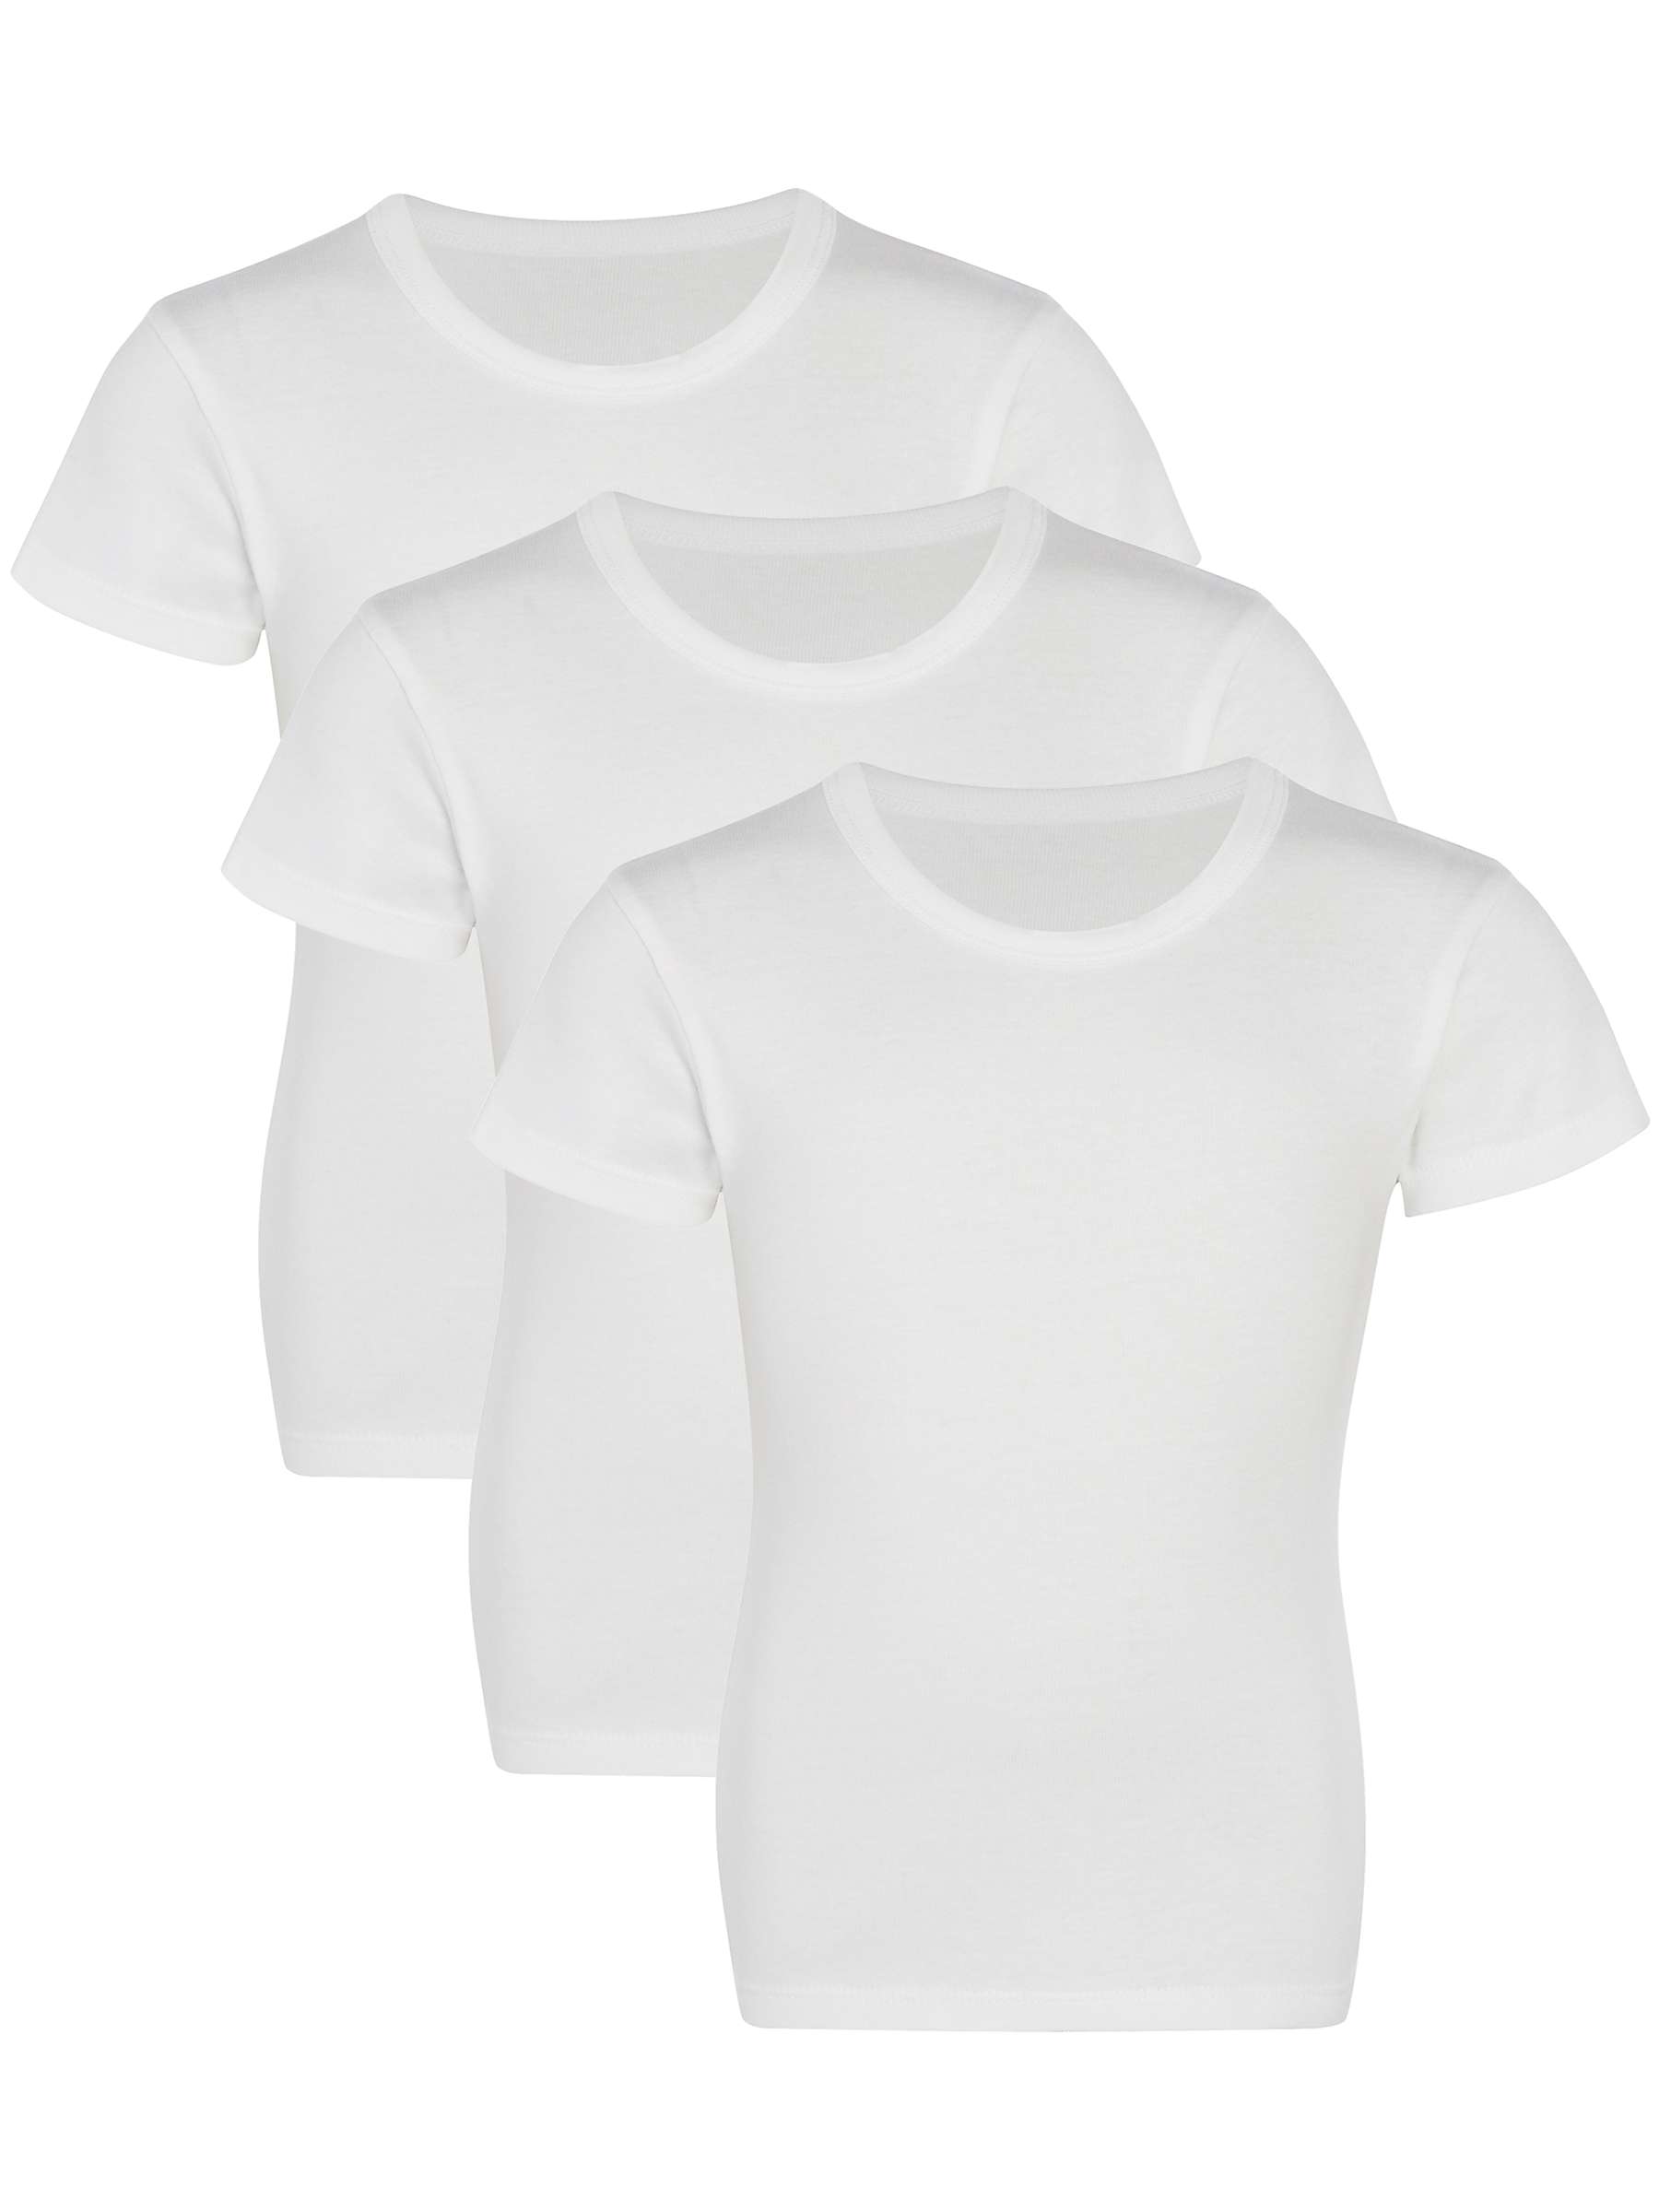 Buy John Lewis ANYDAY Kids' Short Sleeve T-Shirt Vest, Pack of 3, White Online at johnlewis.com